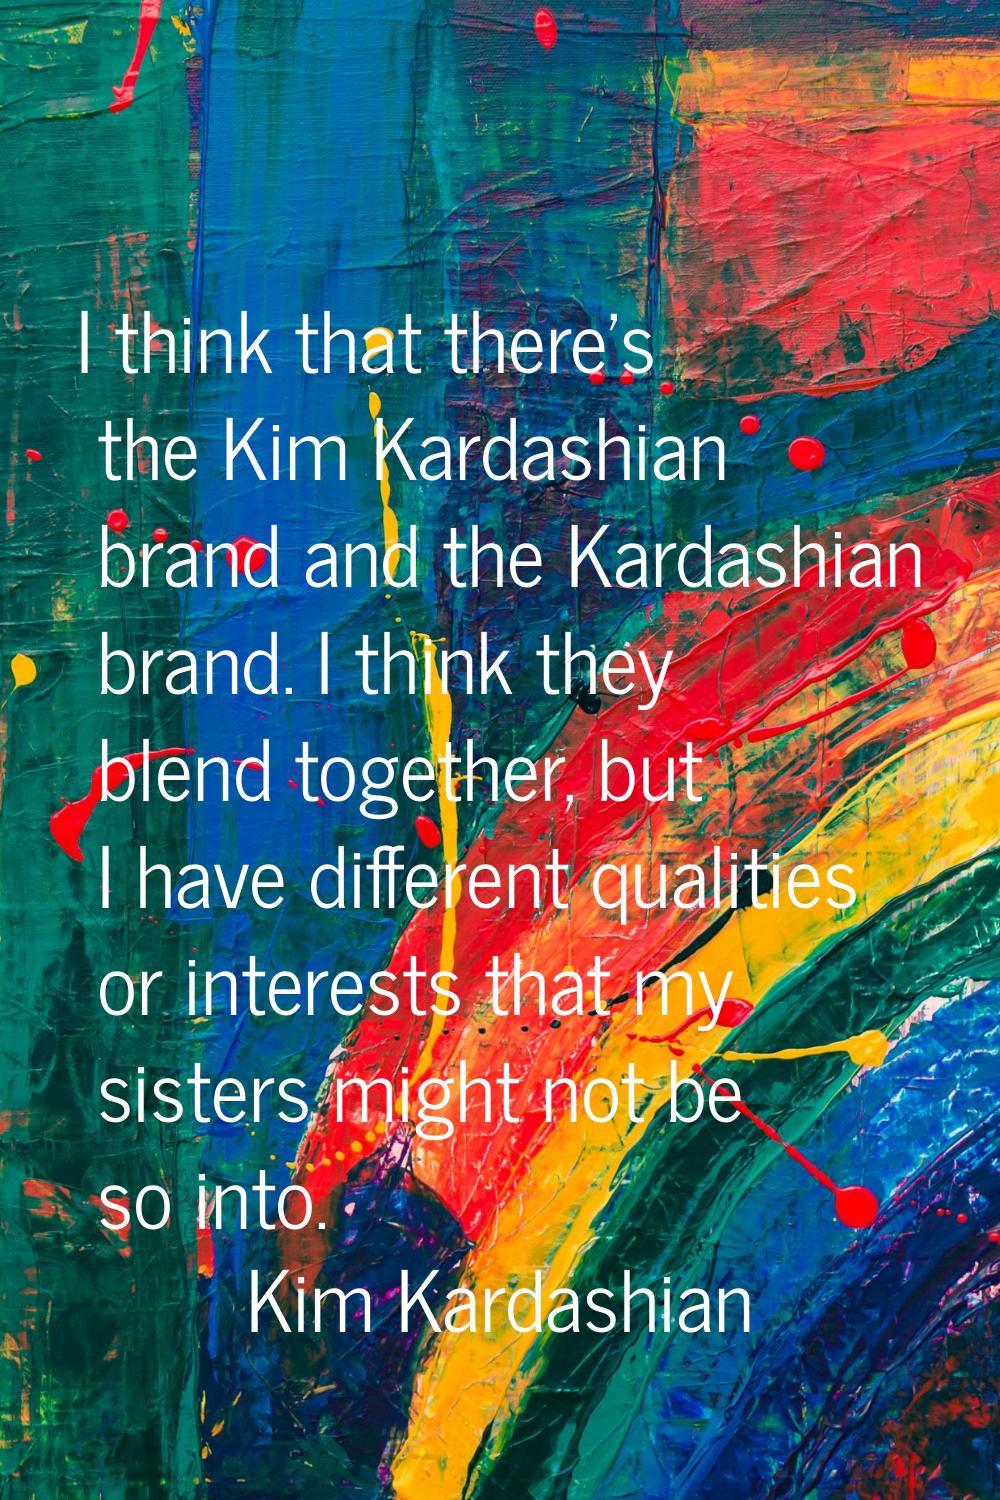 I think that there's the Kim Kardashian brand and the Kardashian brand. I think they blend together